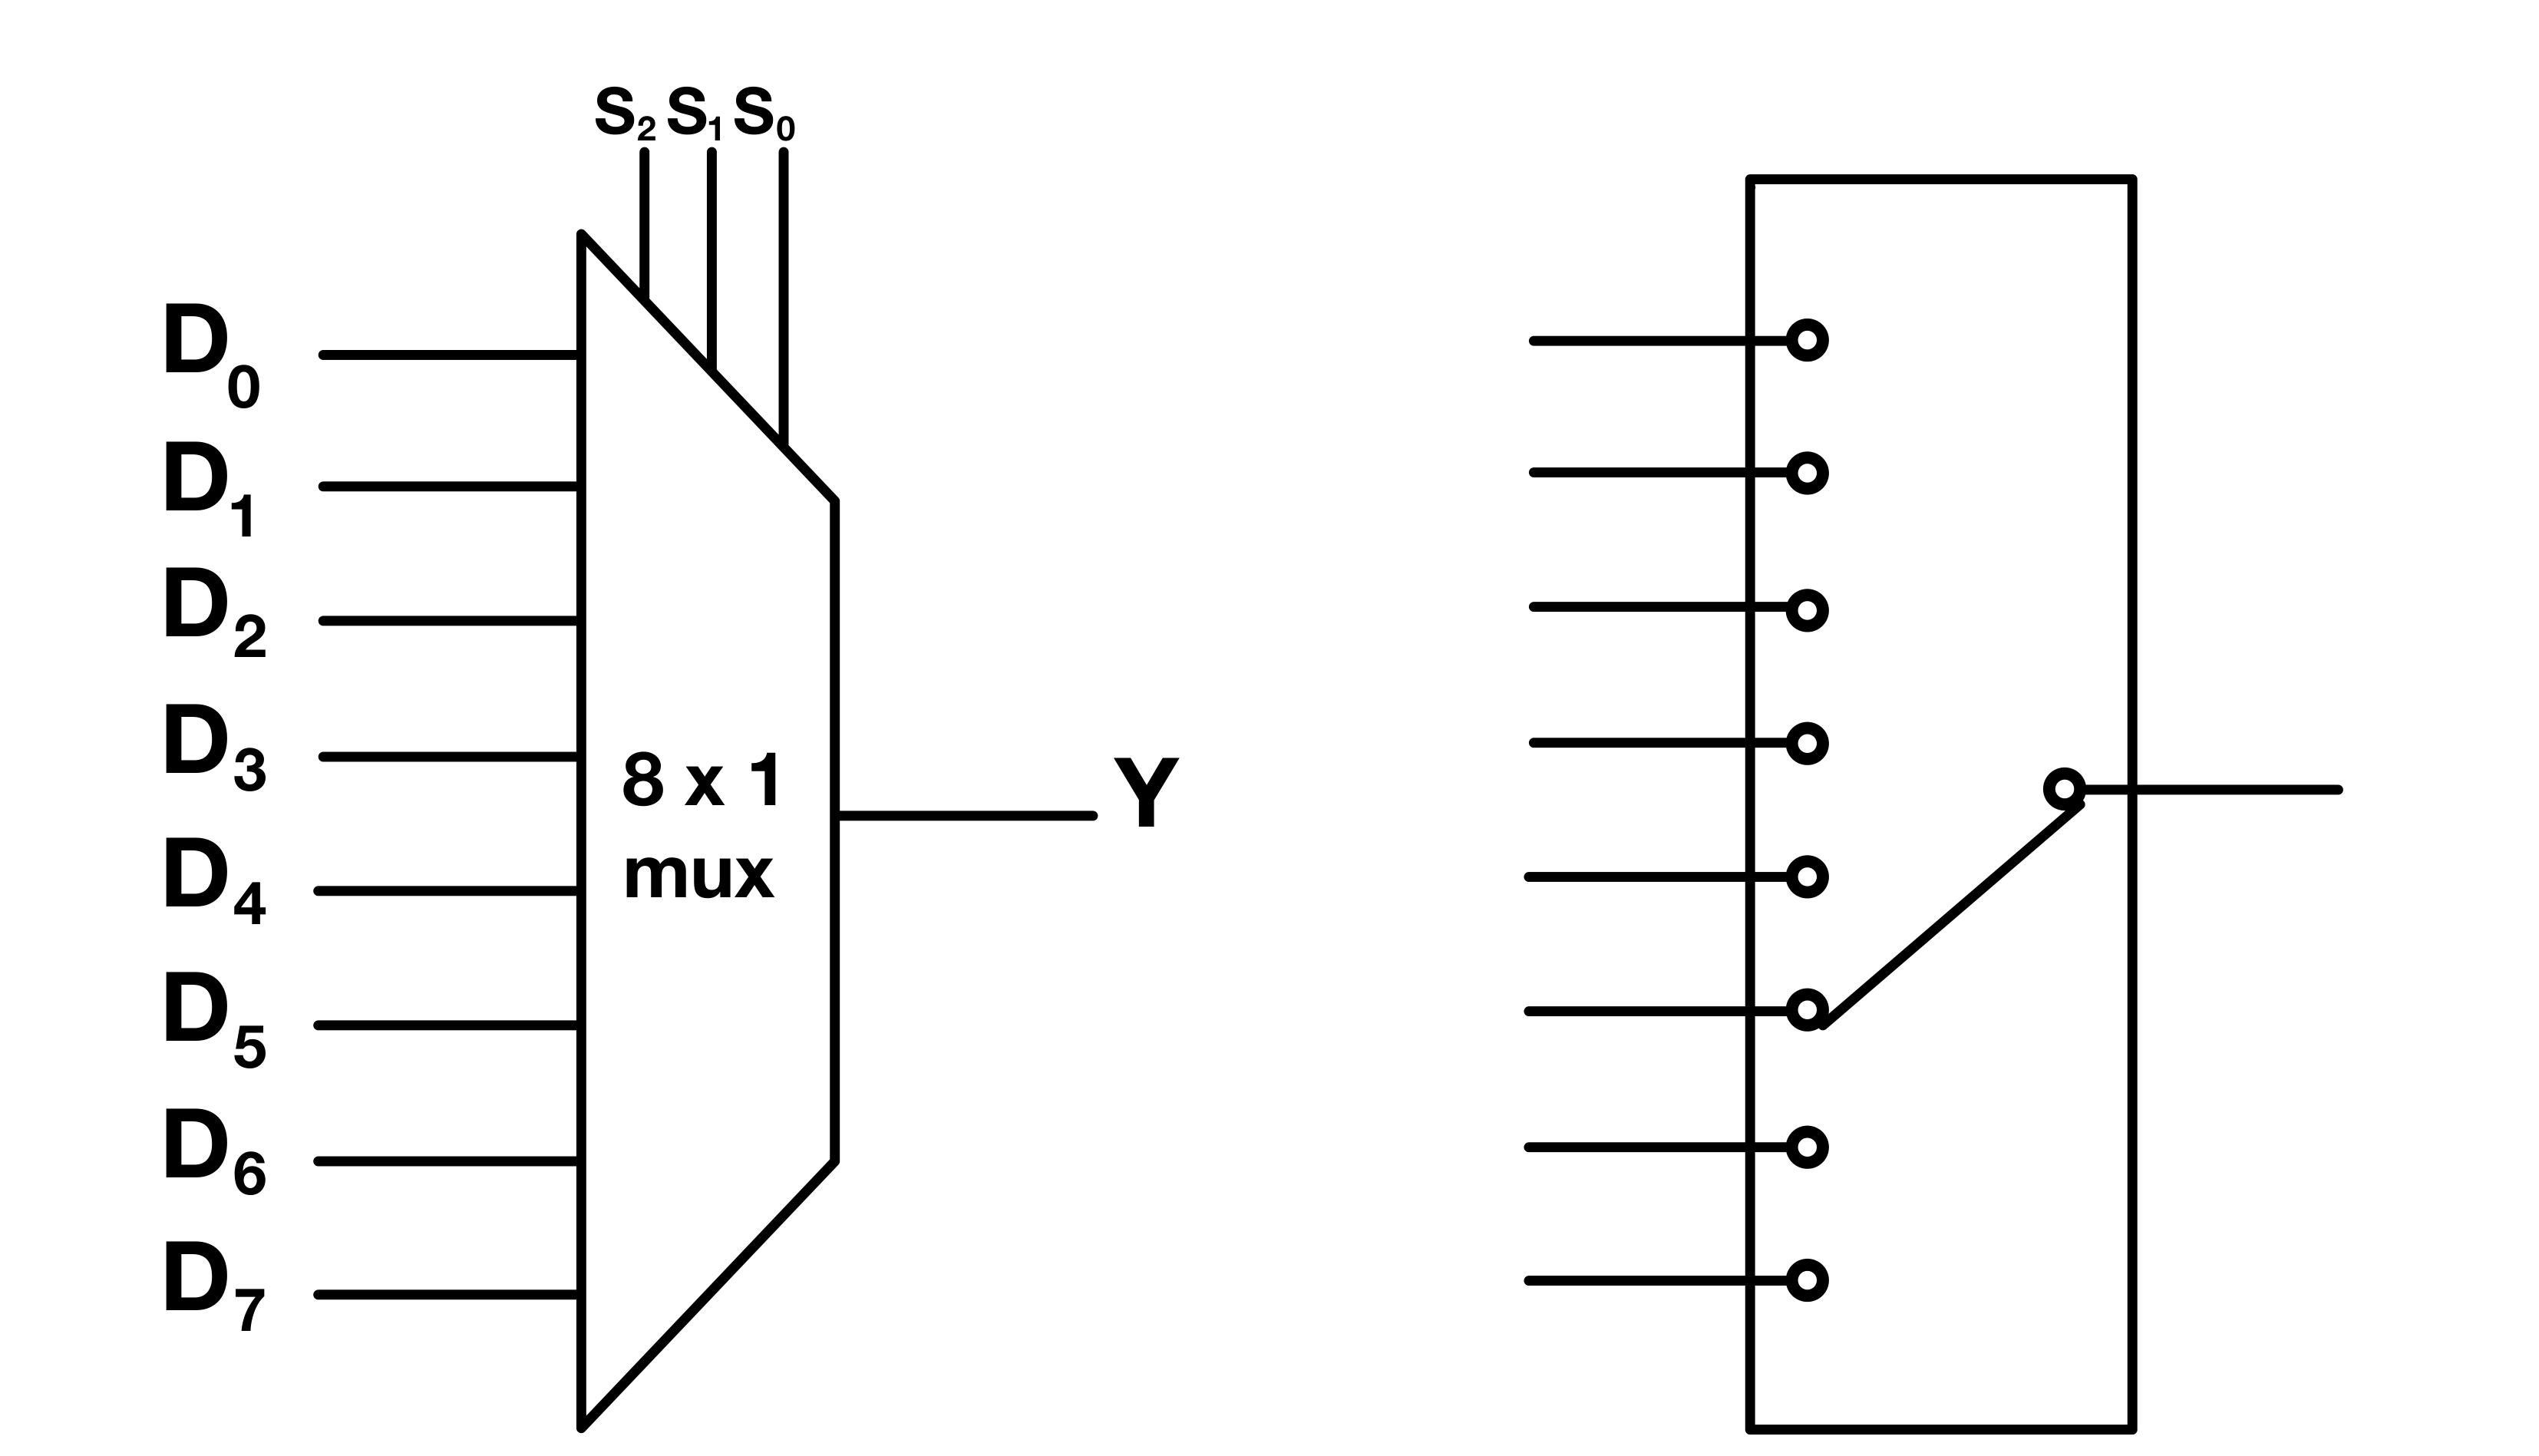 Figure 12: 8-to-1 multiplexer